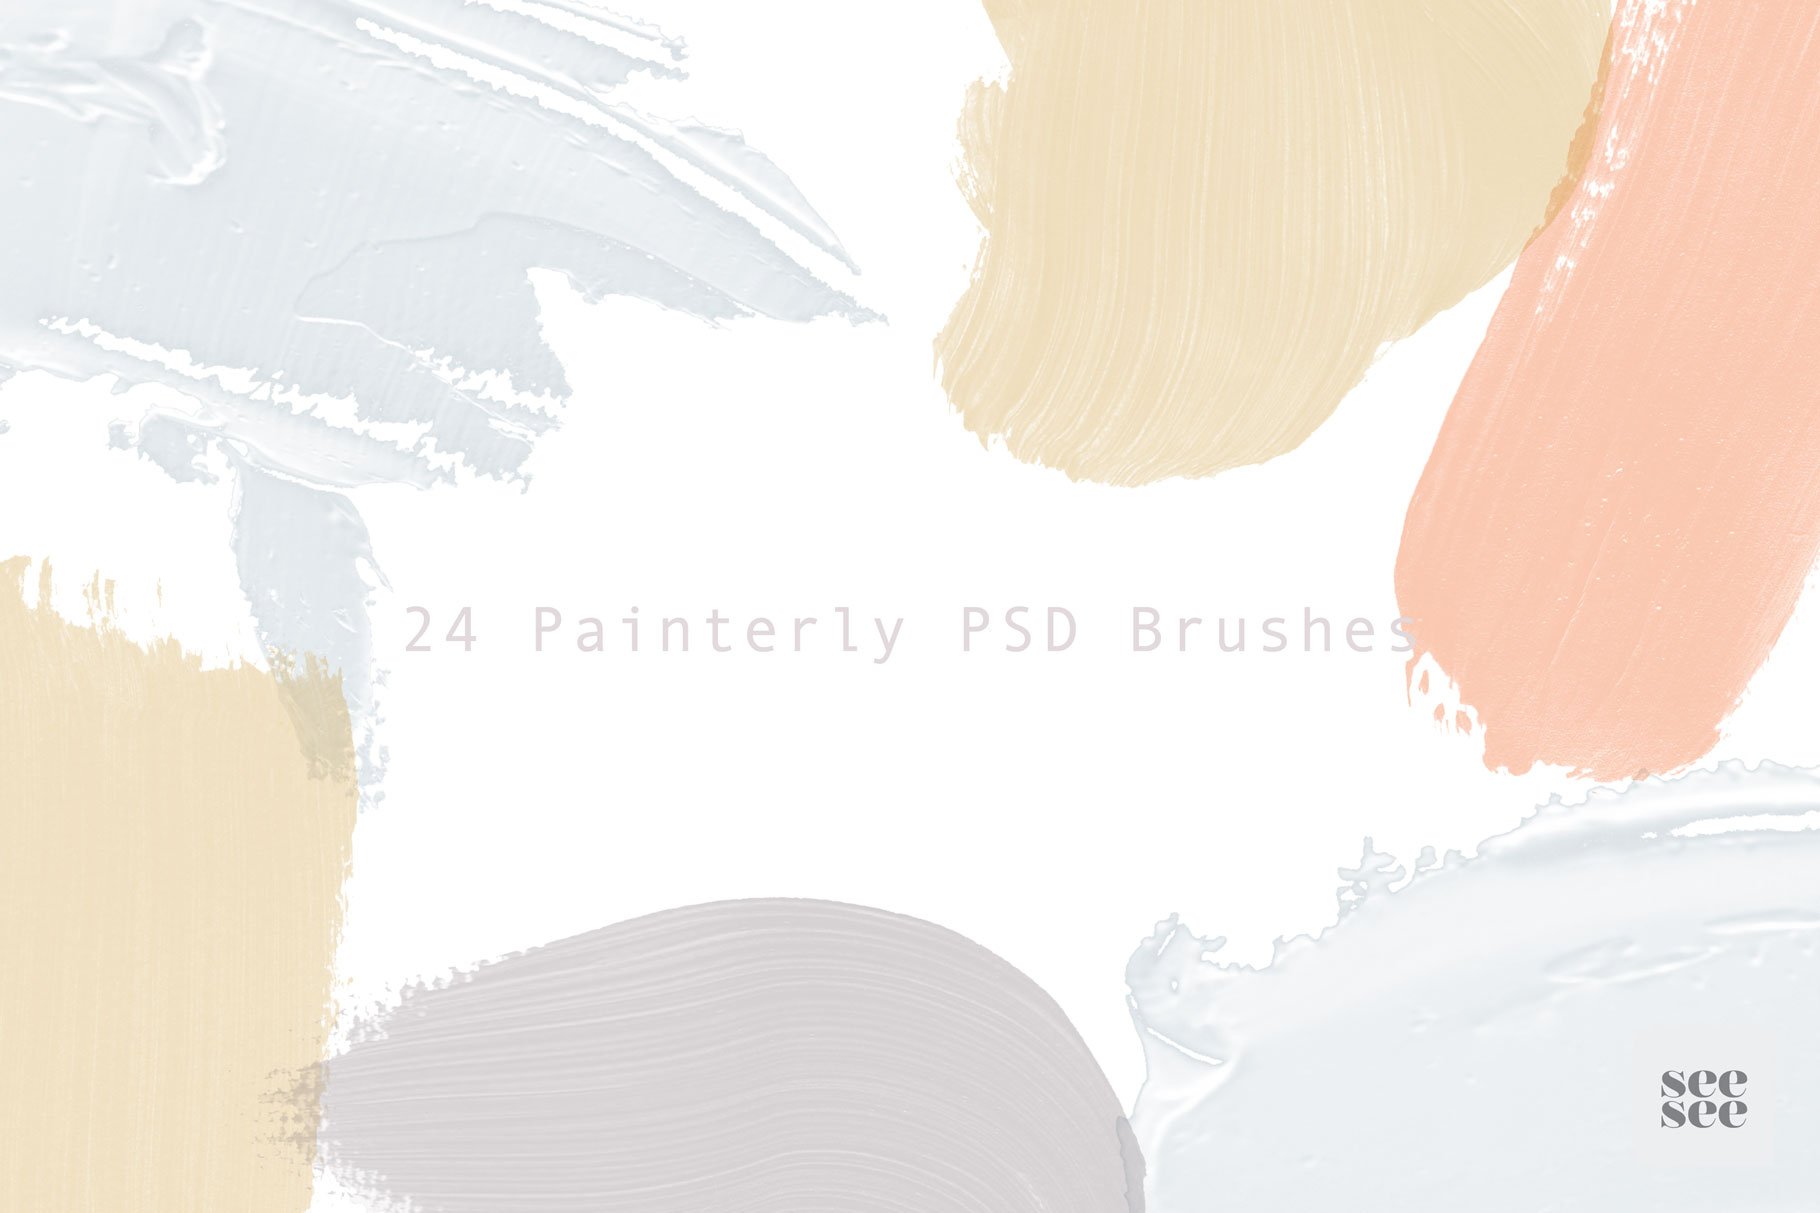 24 Painterly PSD Brushescover image.